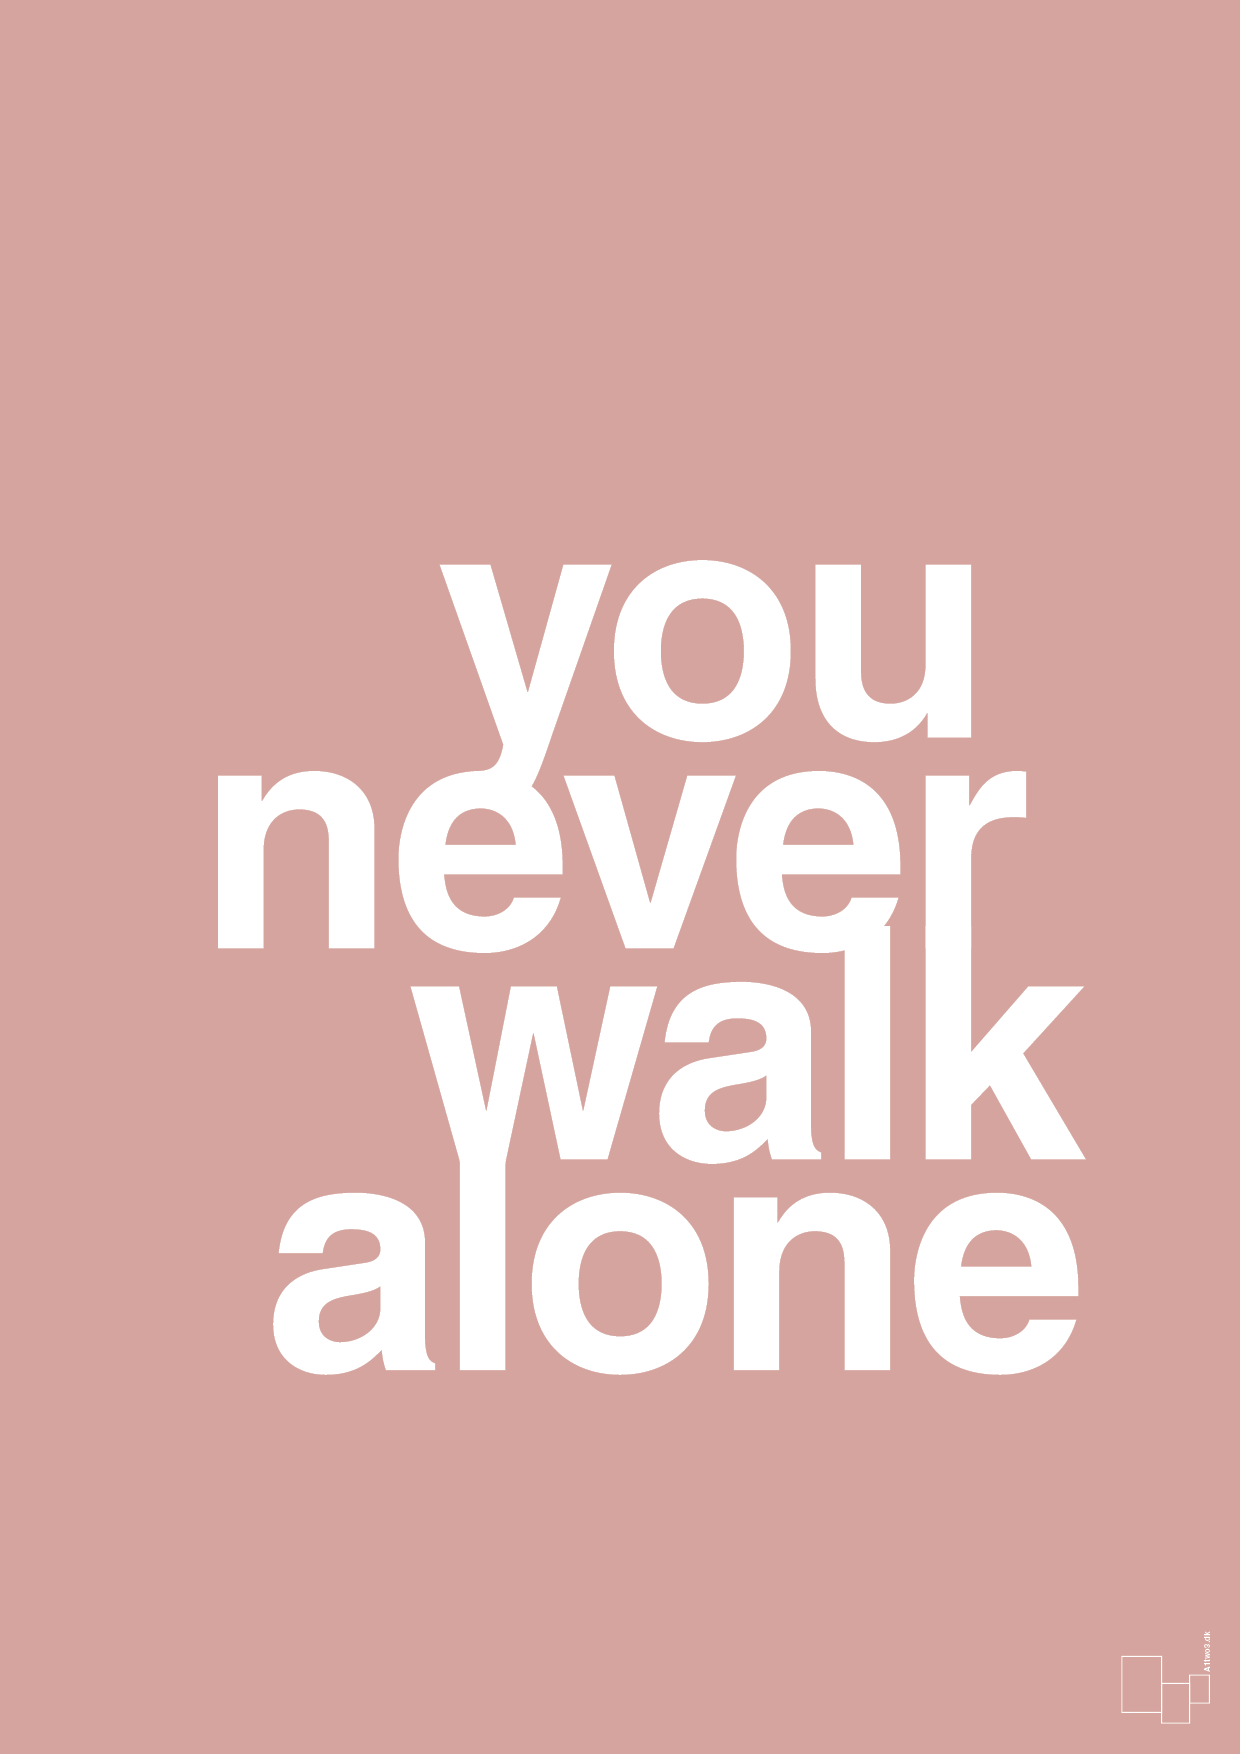 you never walk alone - Plakat med Ordsprog i Bubble Shell